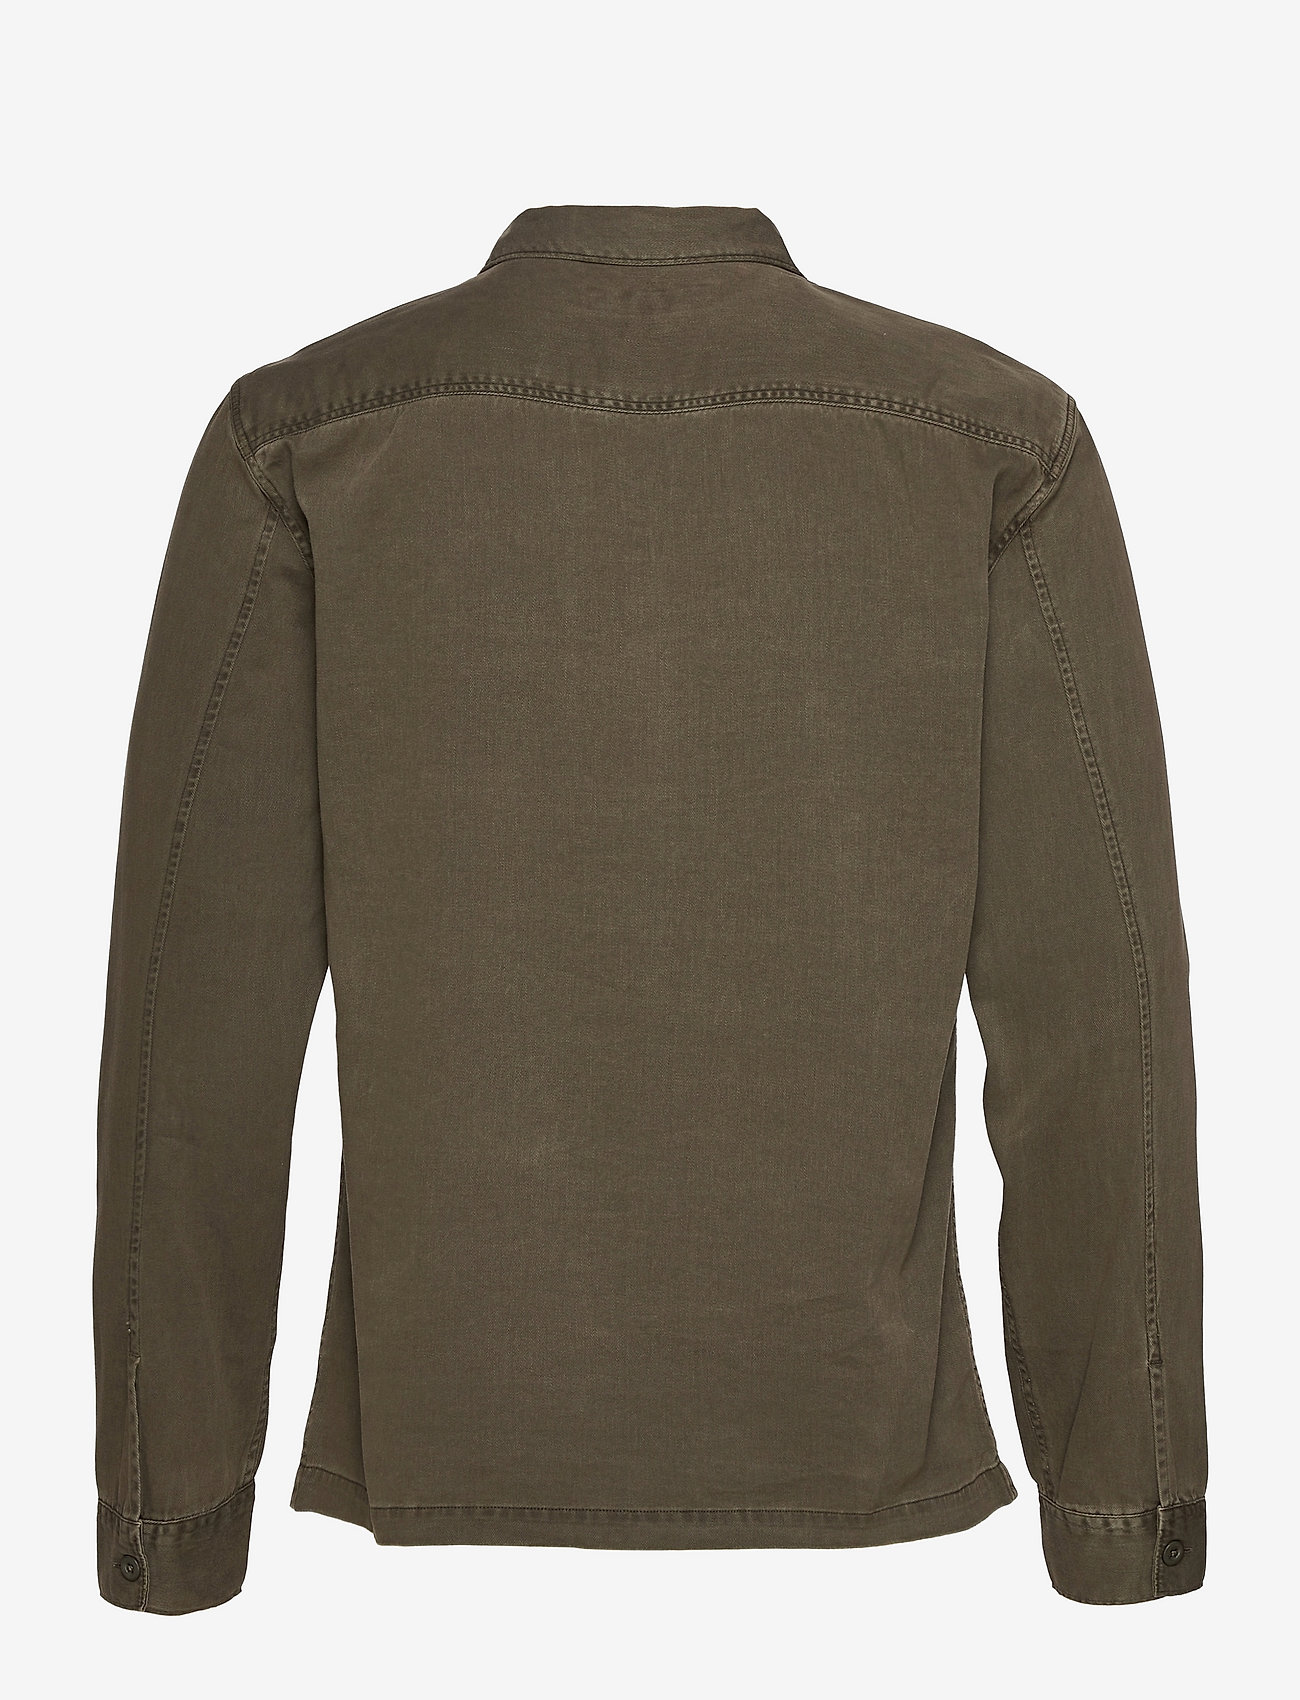 AllSaints - SPOTTER LS SHIRT - basic shirts - cargo green - 1